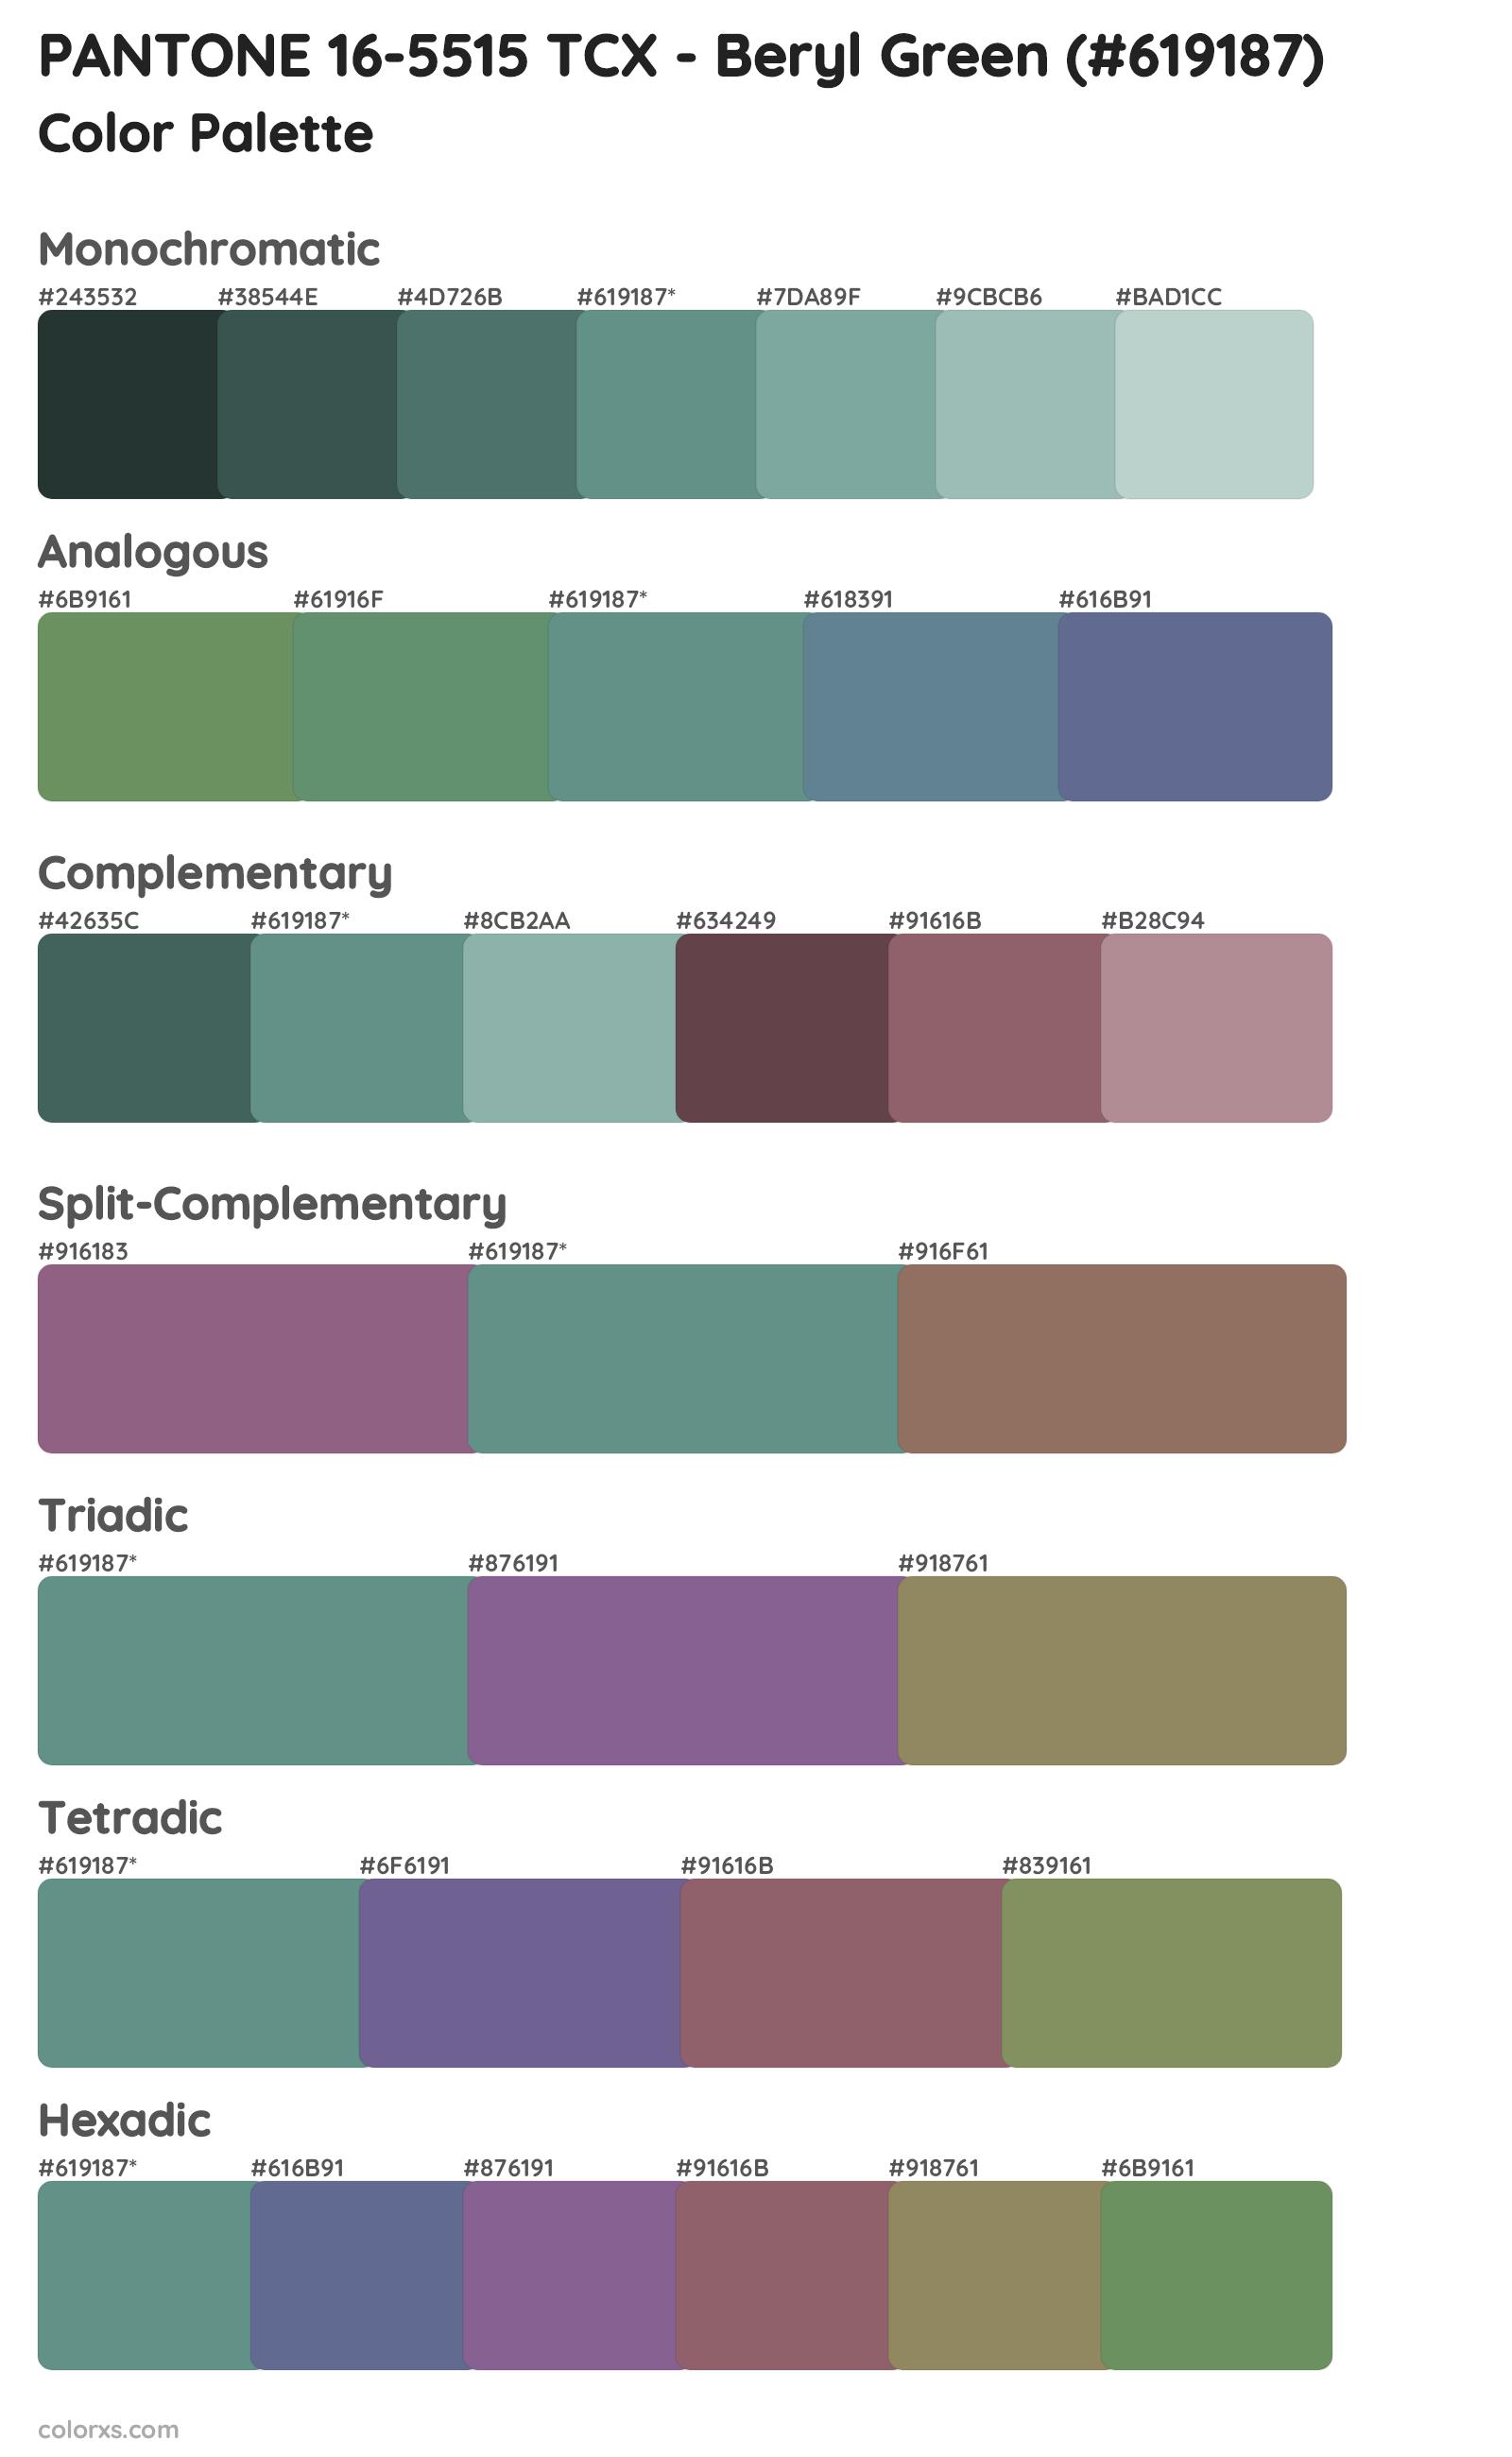 PANTONE 16-5515 TCX - Beryl Green Color Scheme Palettes